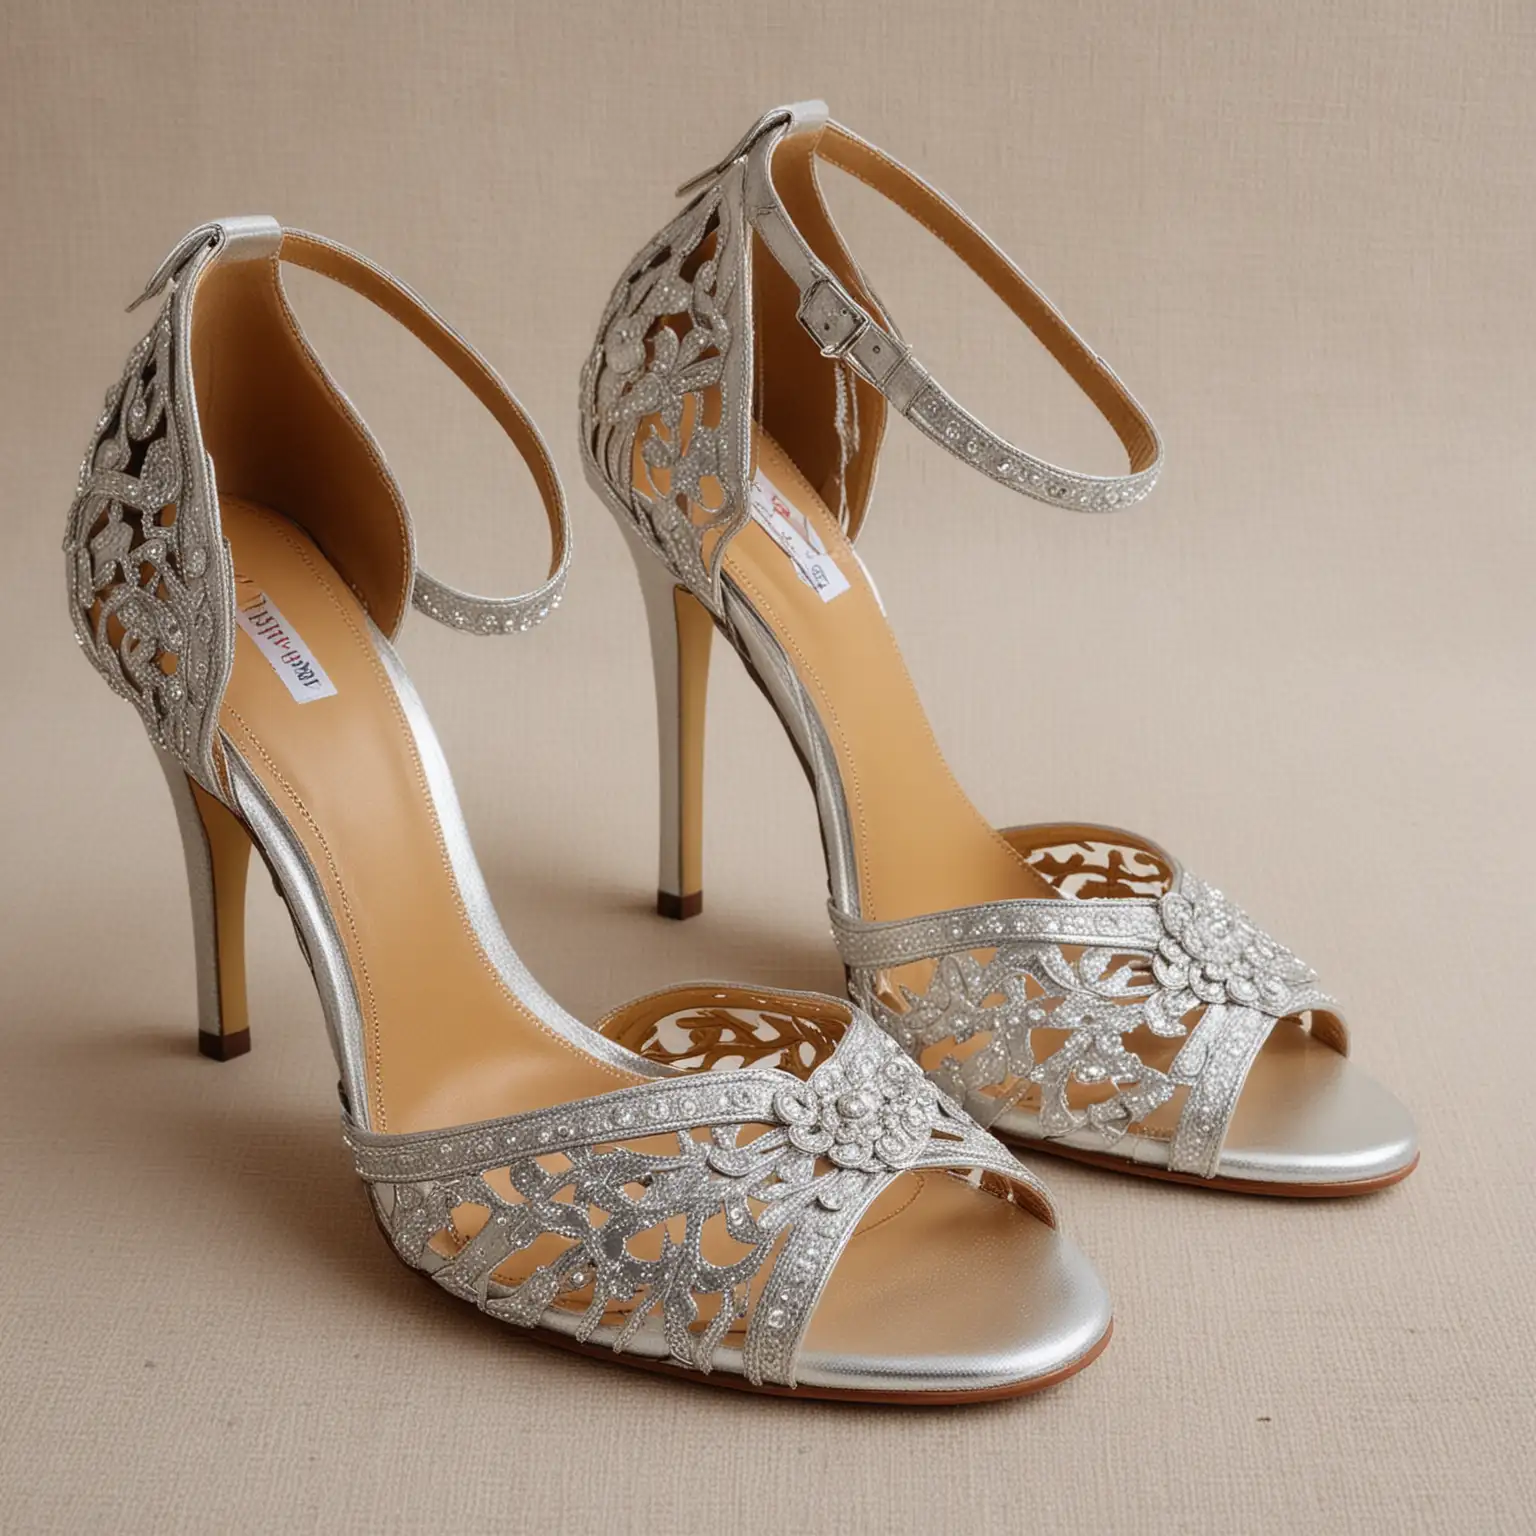 Western Bridal Shoes Elegant Golden and Silver Designs